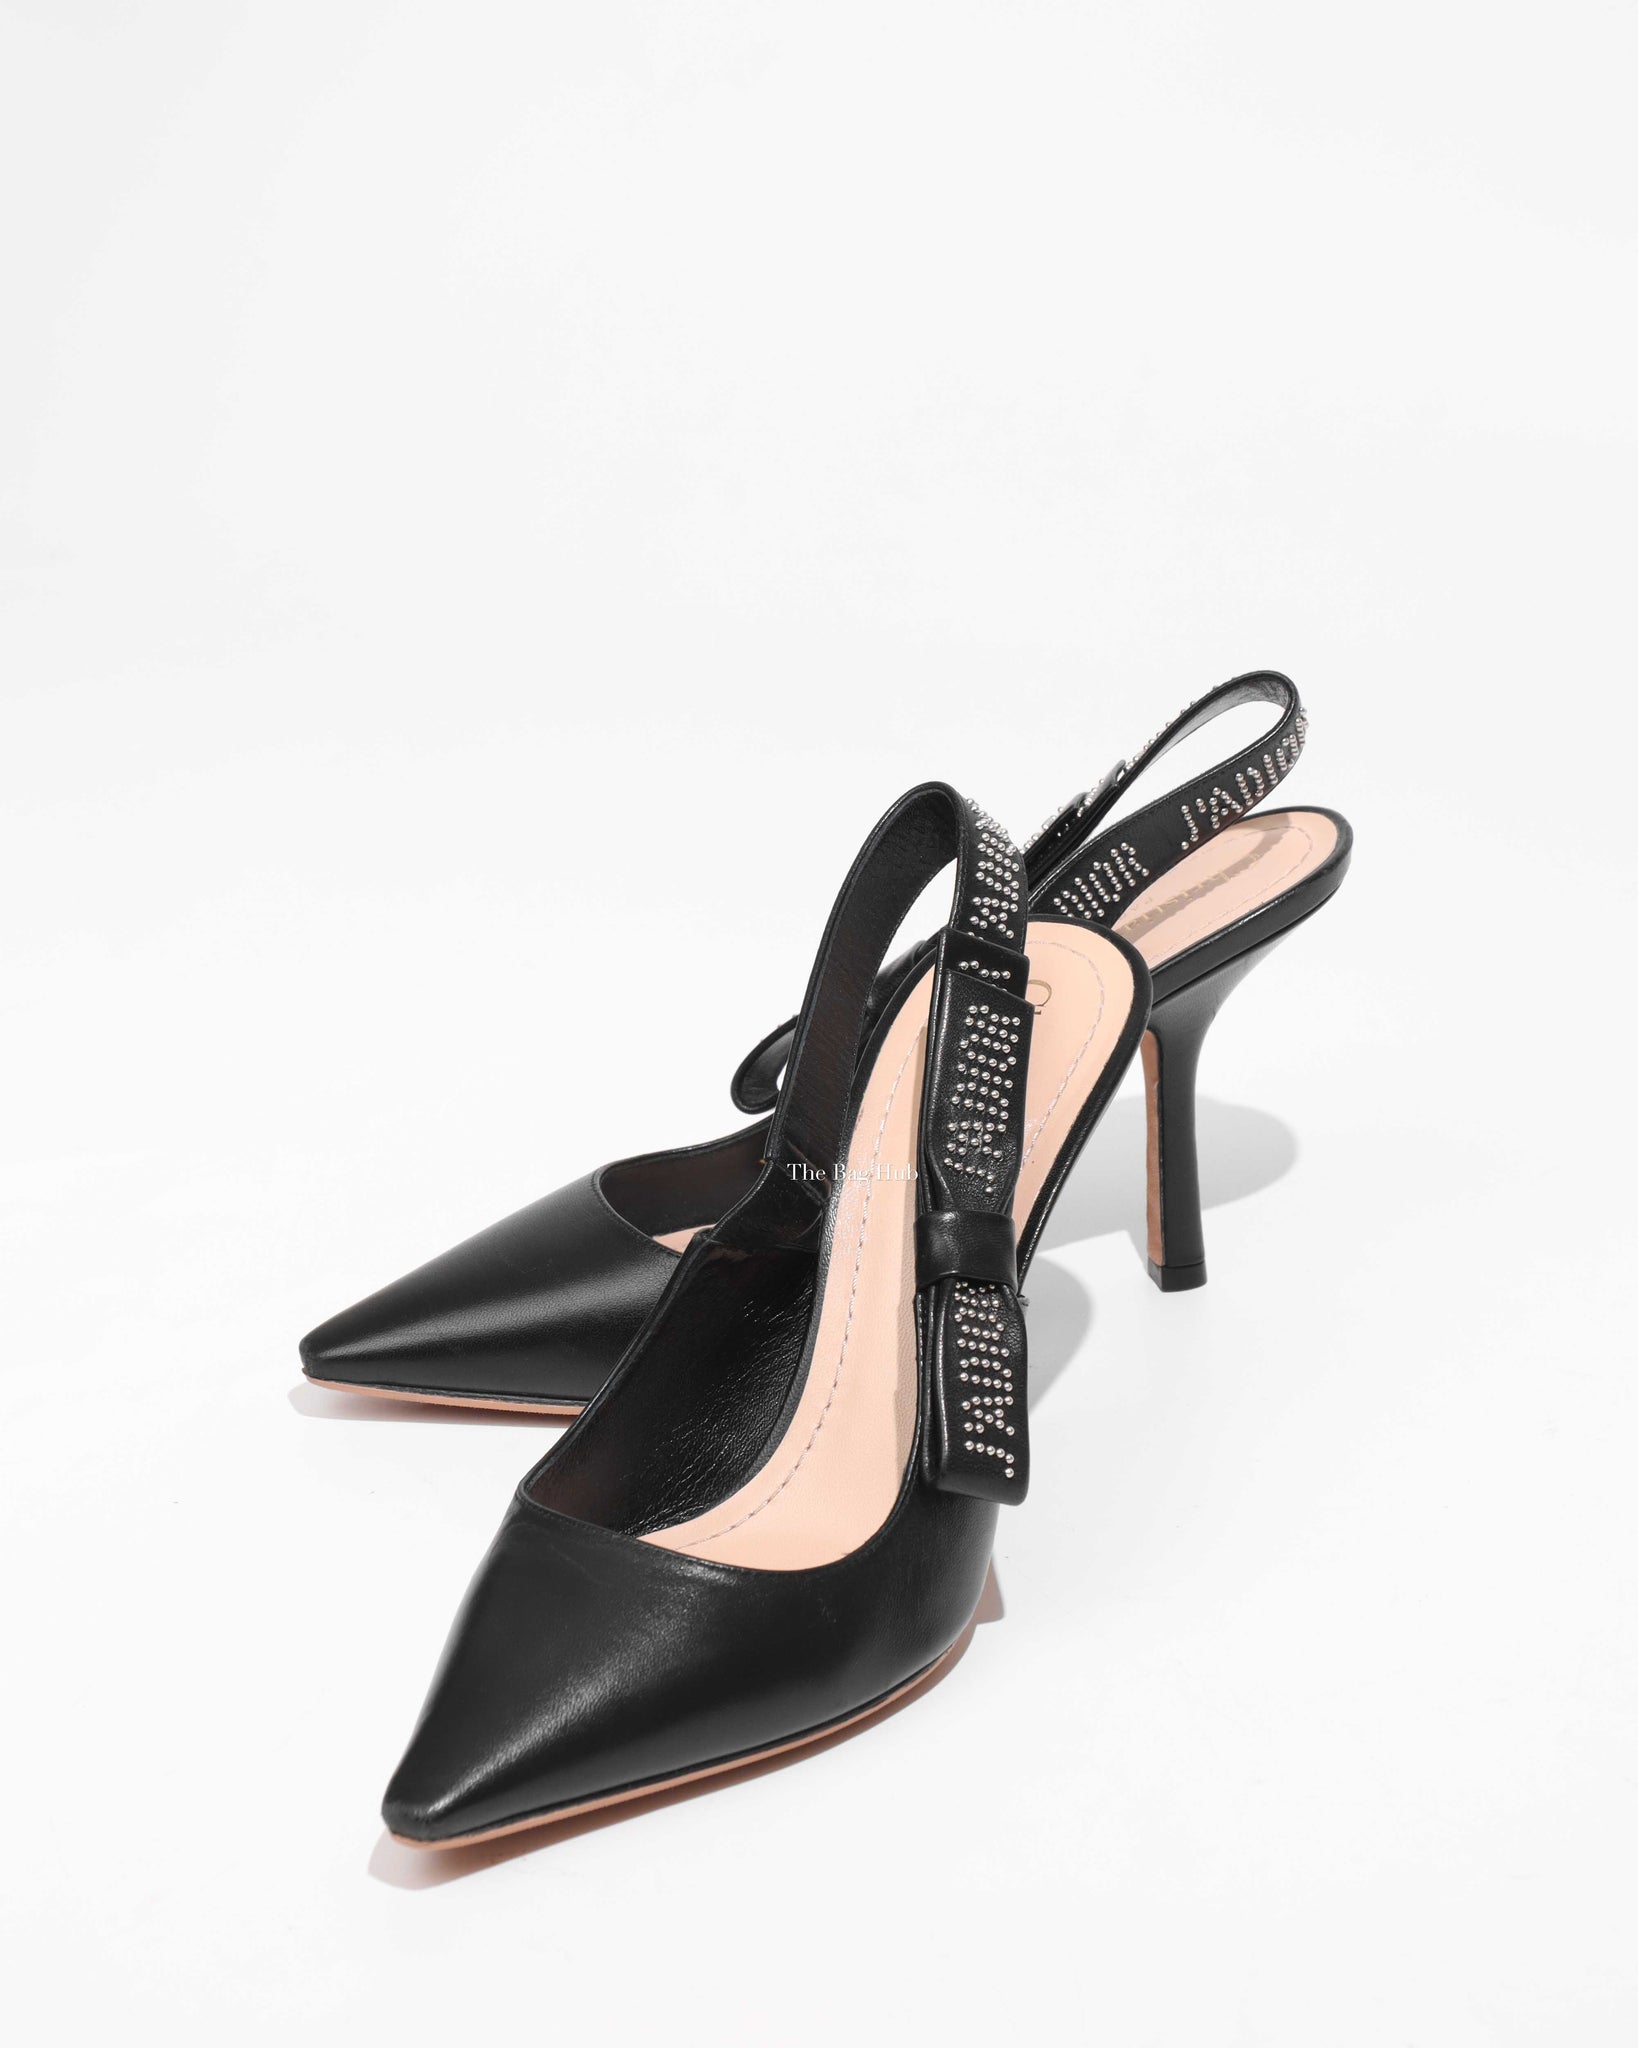 Dior Jadior slingback pumps | LOVIKA | Heels outfits, Fashion, Kitten heels  outfit